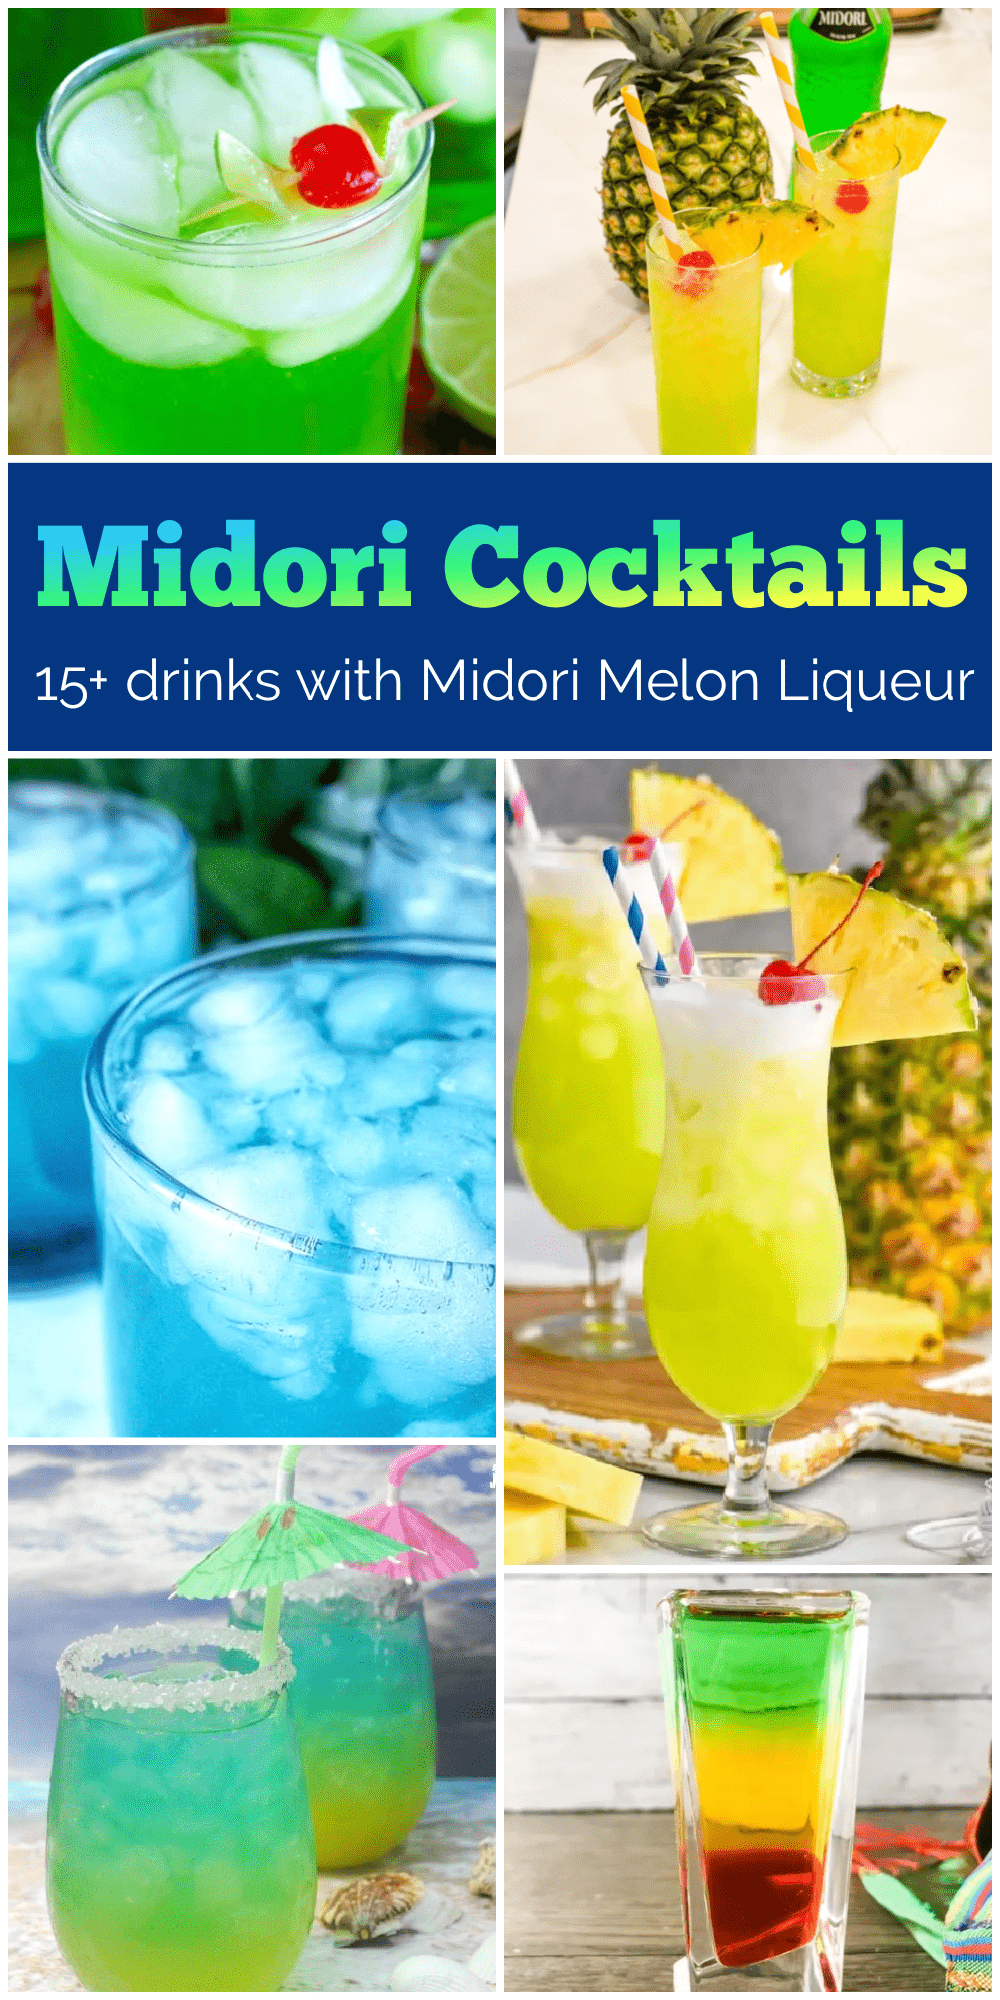 Midori Cocktails - Long collage image of Midori Drinks.